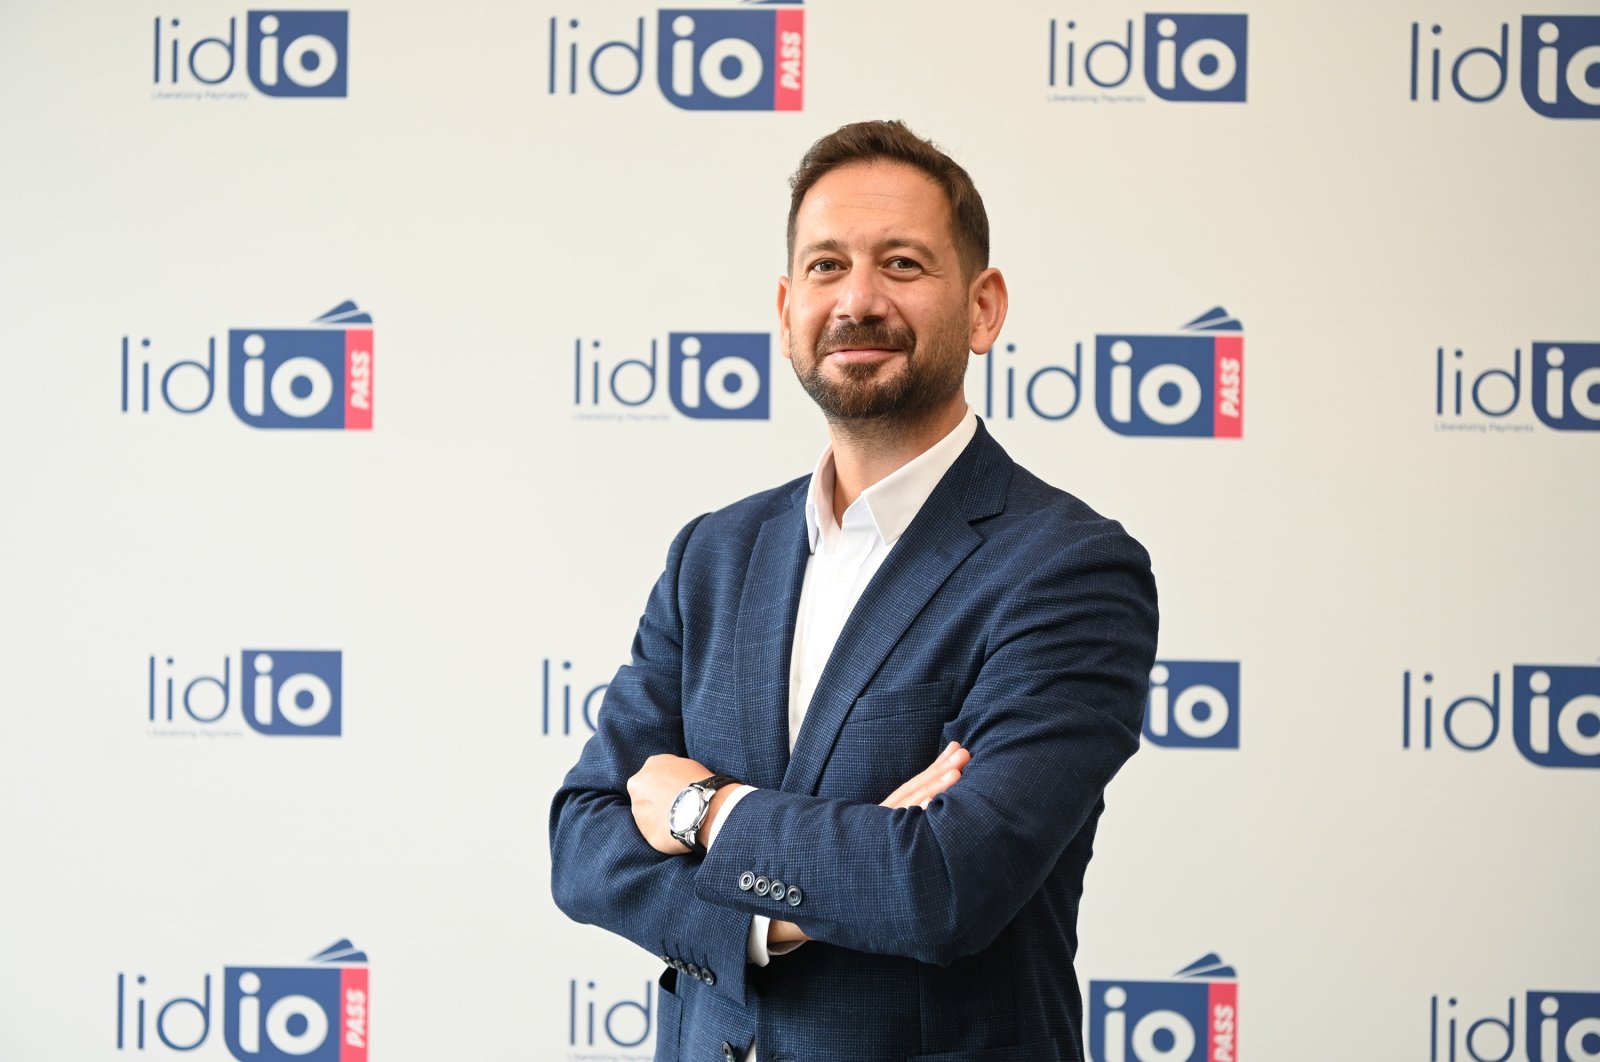 Lidio co-founder and CEO Emre Güzer. (Courtesy of Lidio)